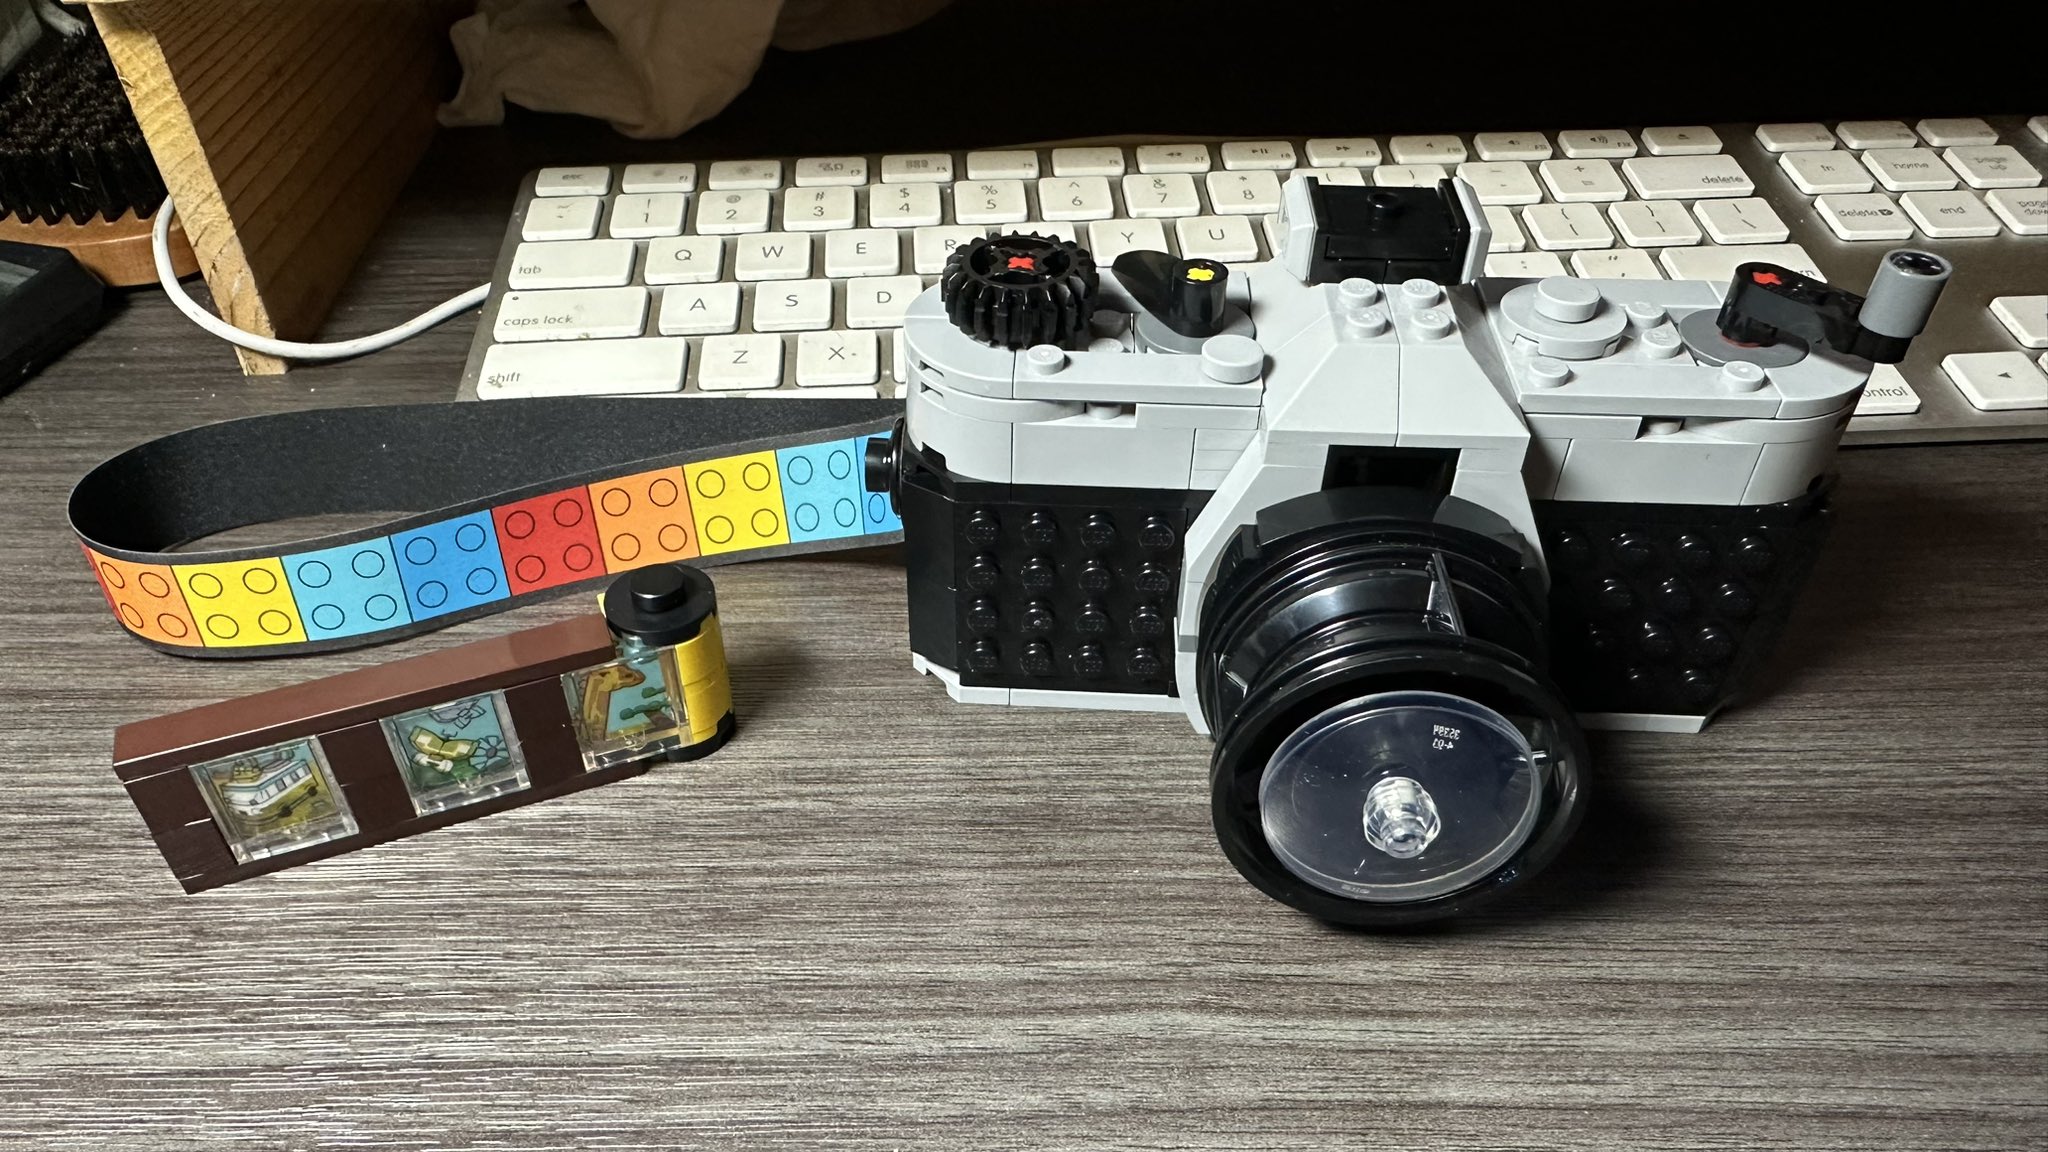 LEGO Cámara Digital de 8 MP